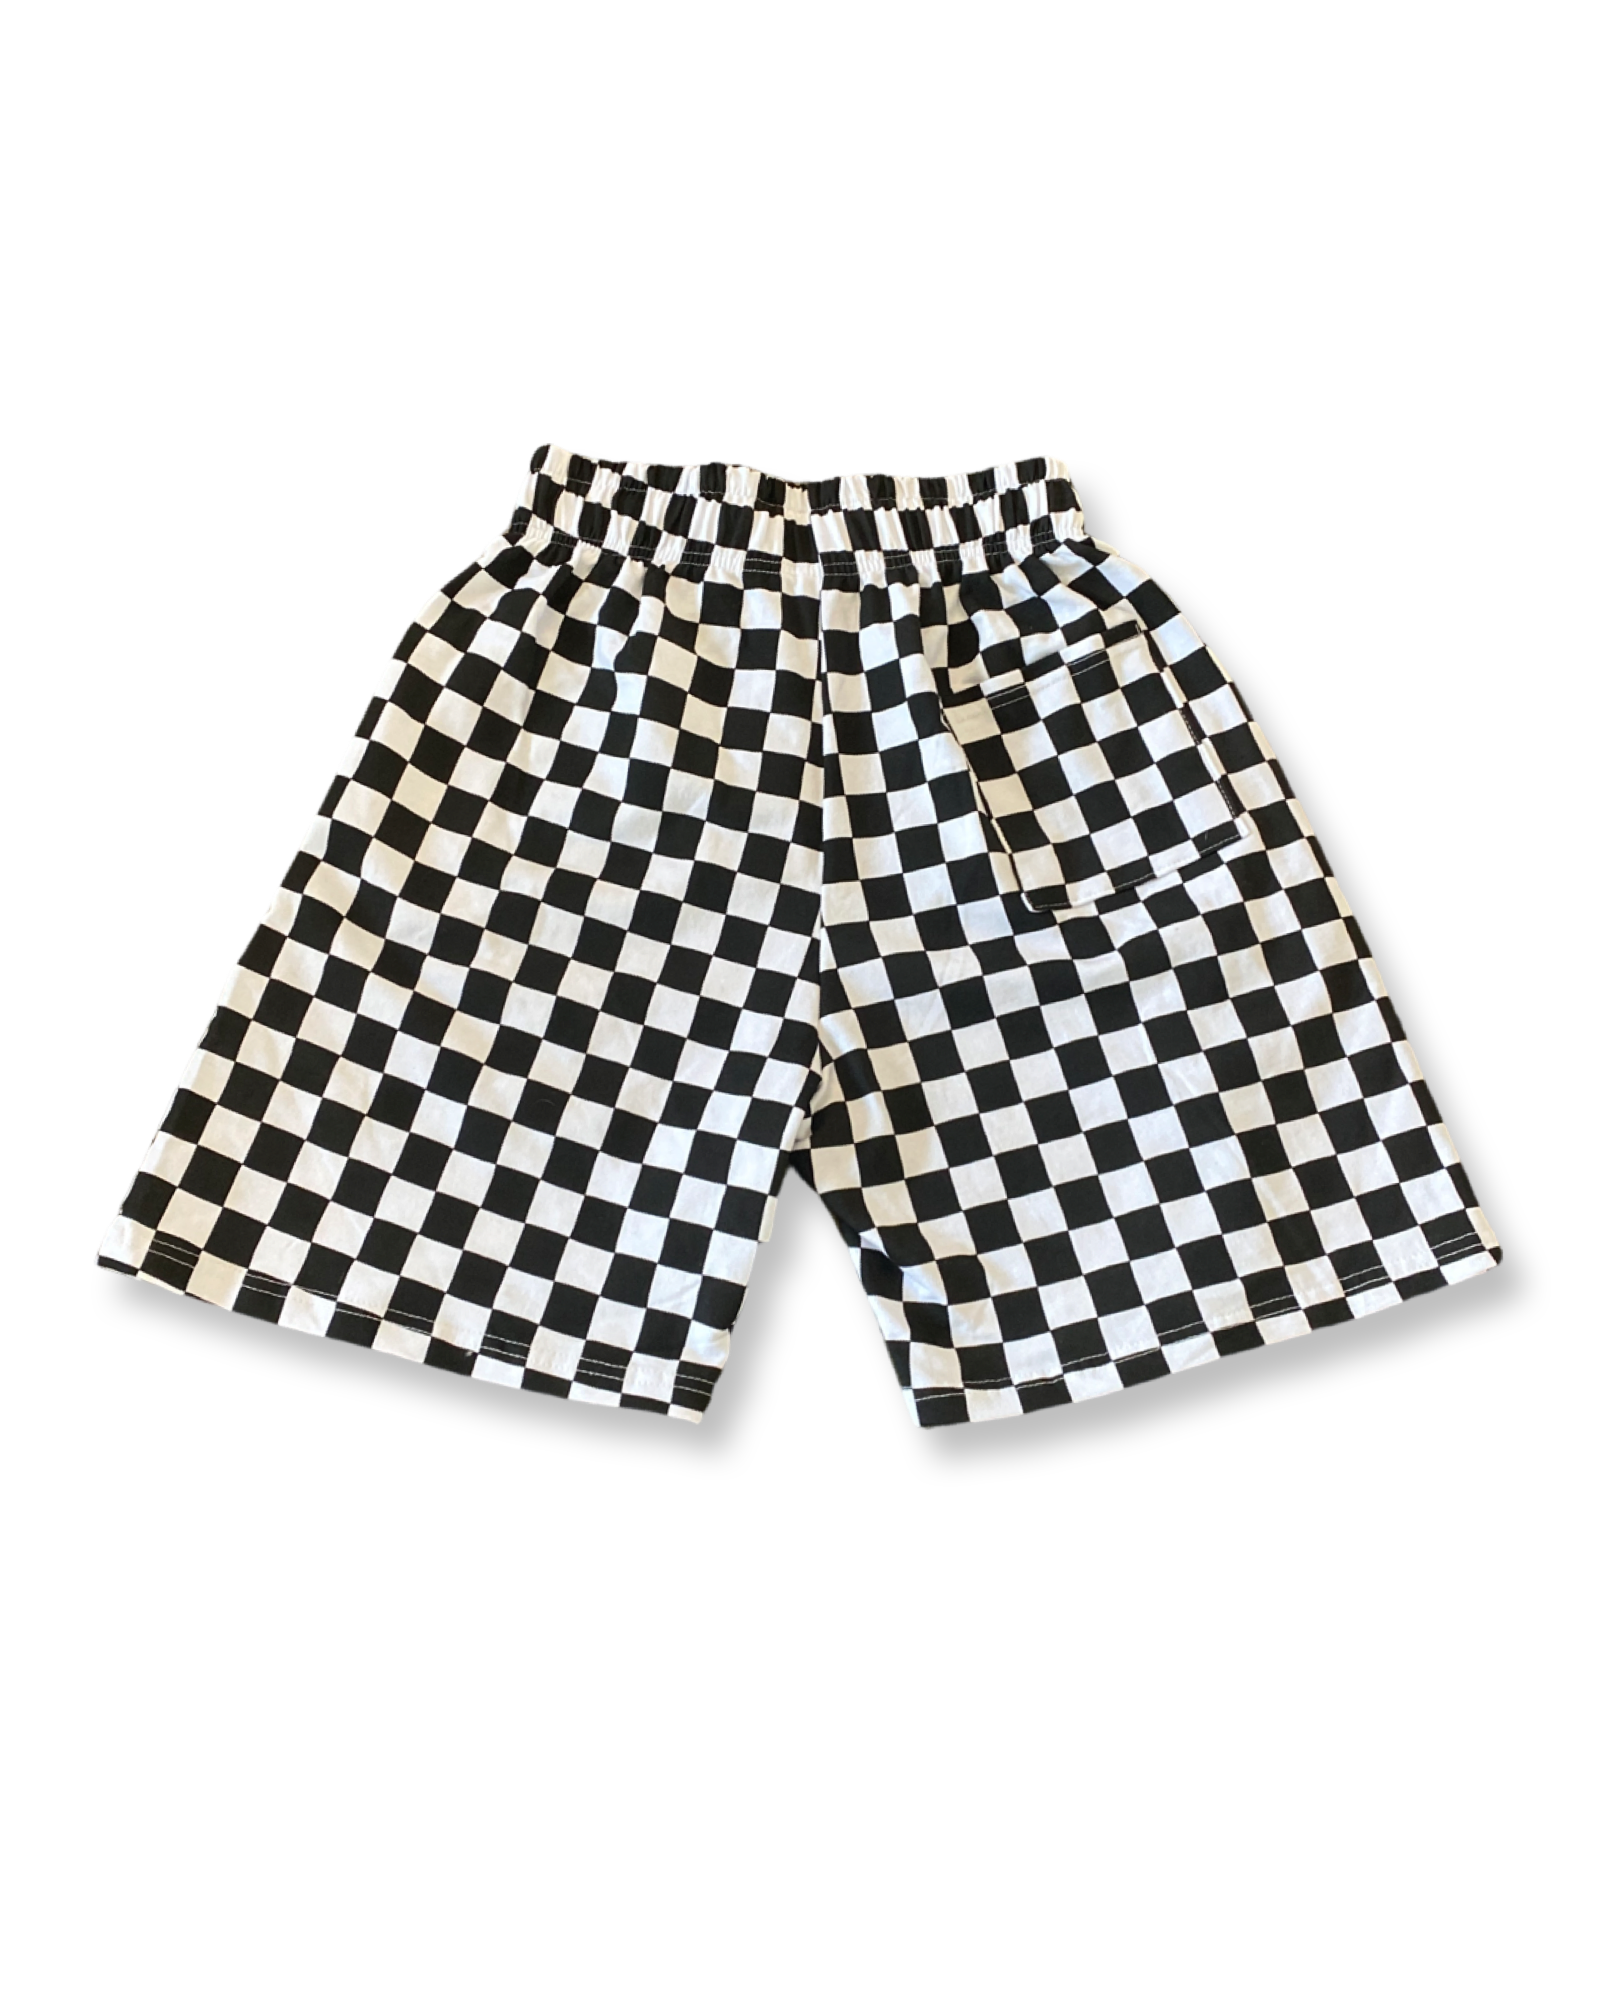 Unisex Checkered Shorts